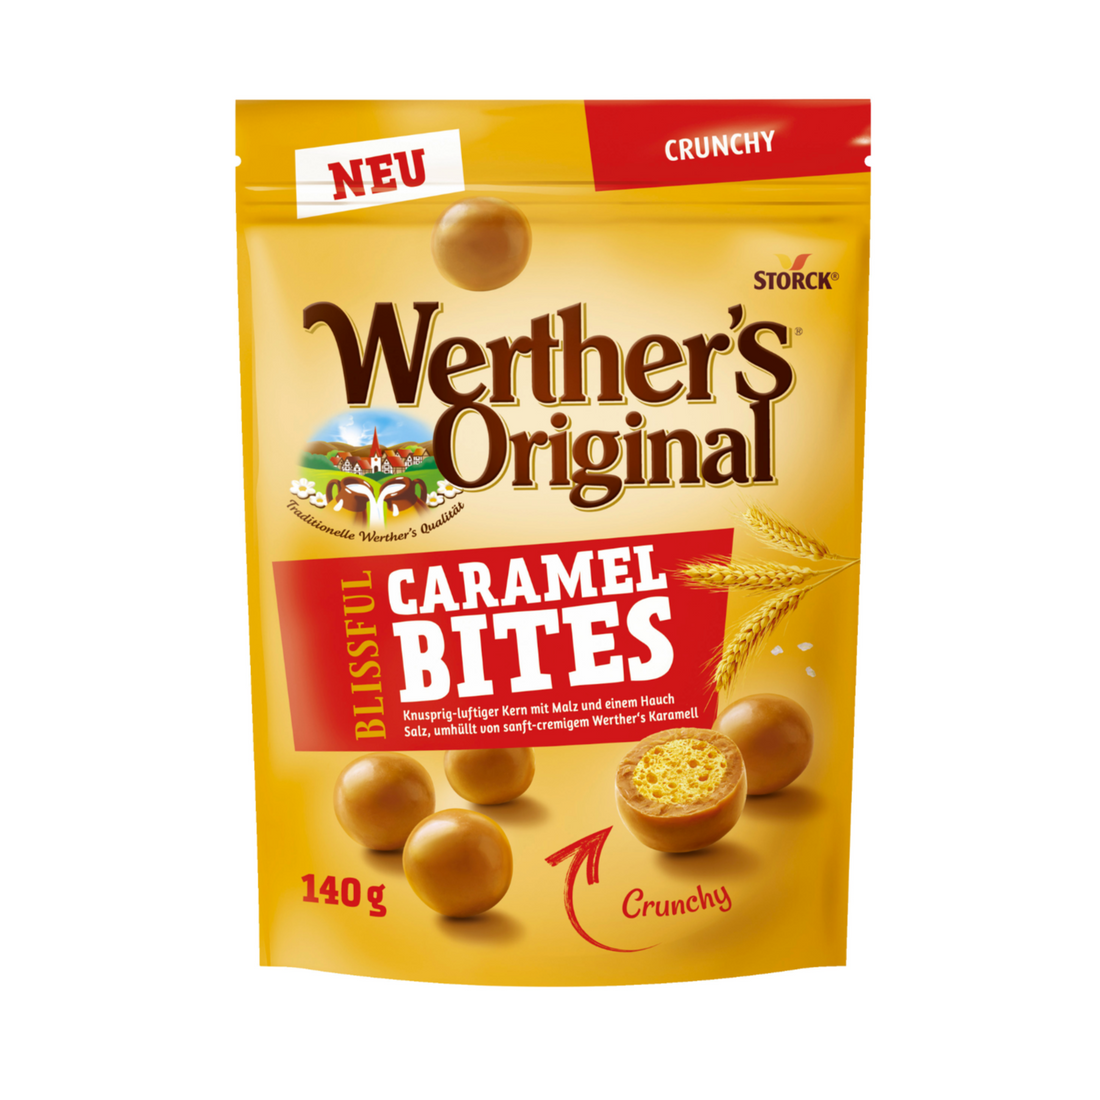 Caramel Bites Crunchy Werther's Original